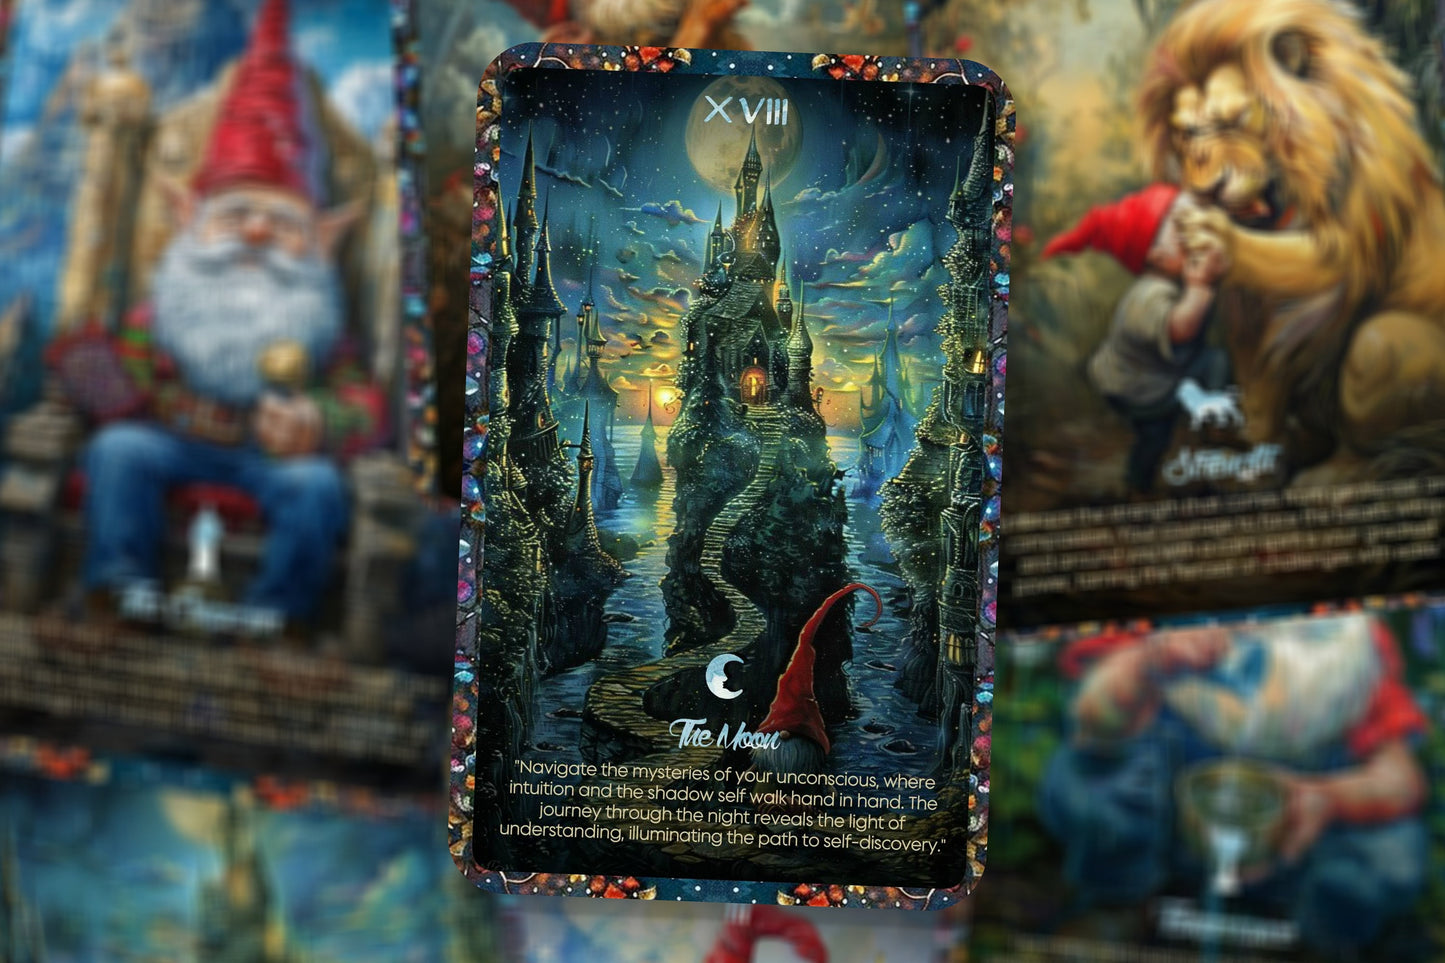 Gnome's Tale - A Tarot Journey - 22 Major Arcana Cards - Divination tools -  through the mystical world of garden gnomes - Tarot cards